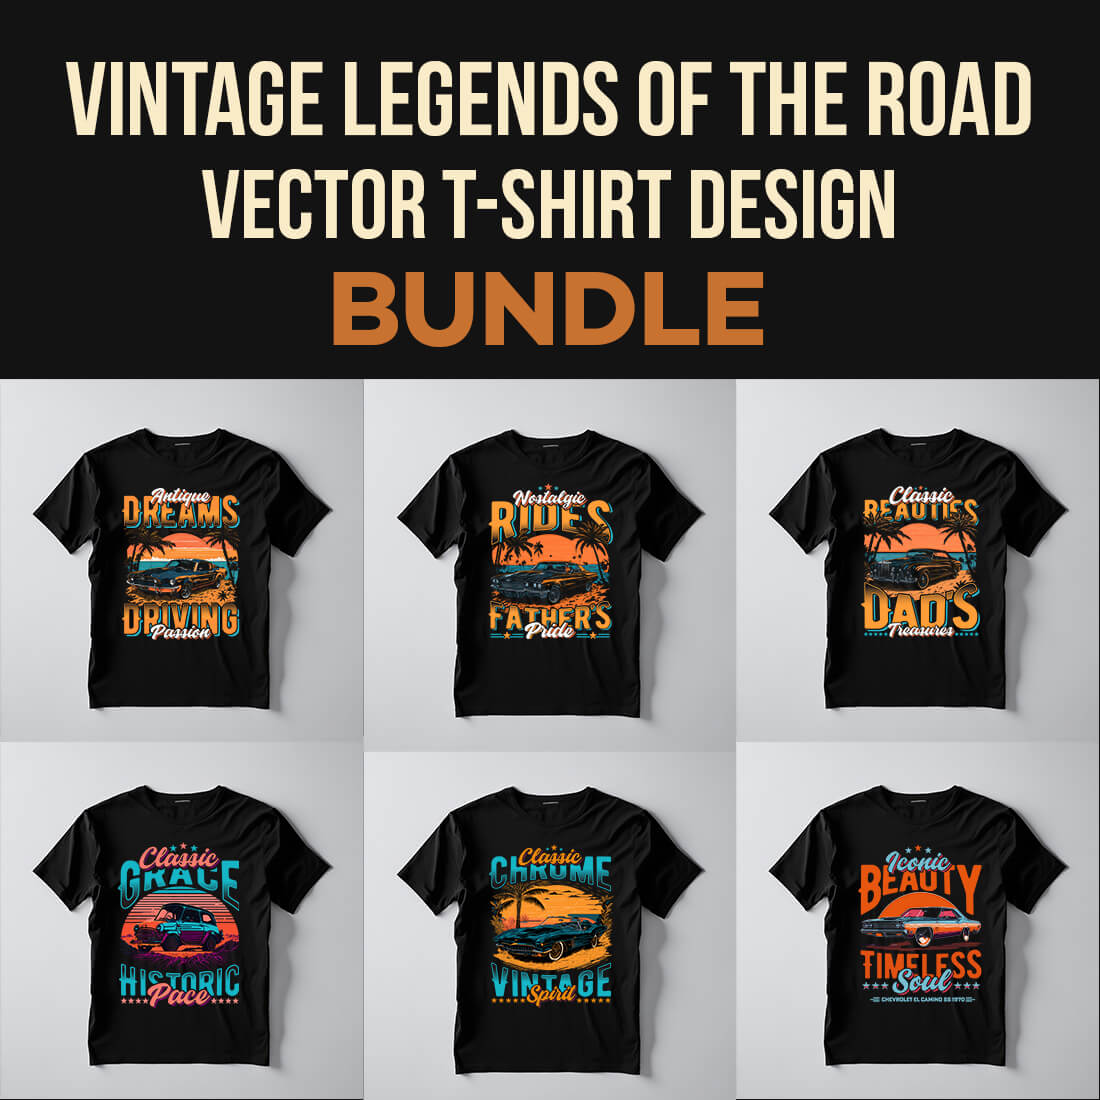 Vintage Legends Of The Road: The Best Classic Car T-shirt Design Vector Bundle cover image.